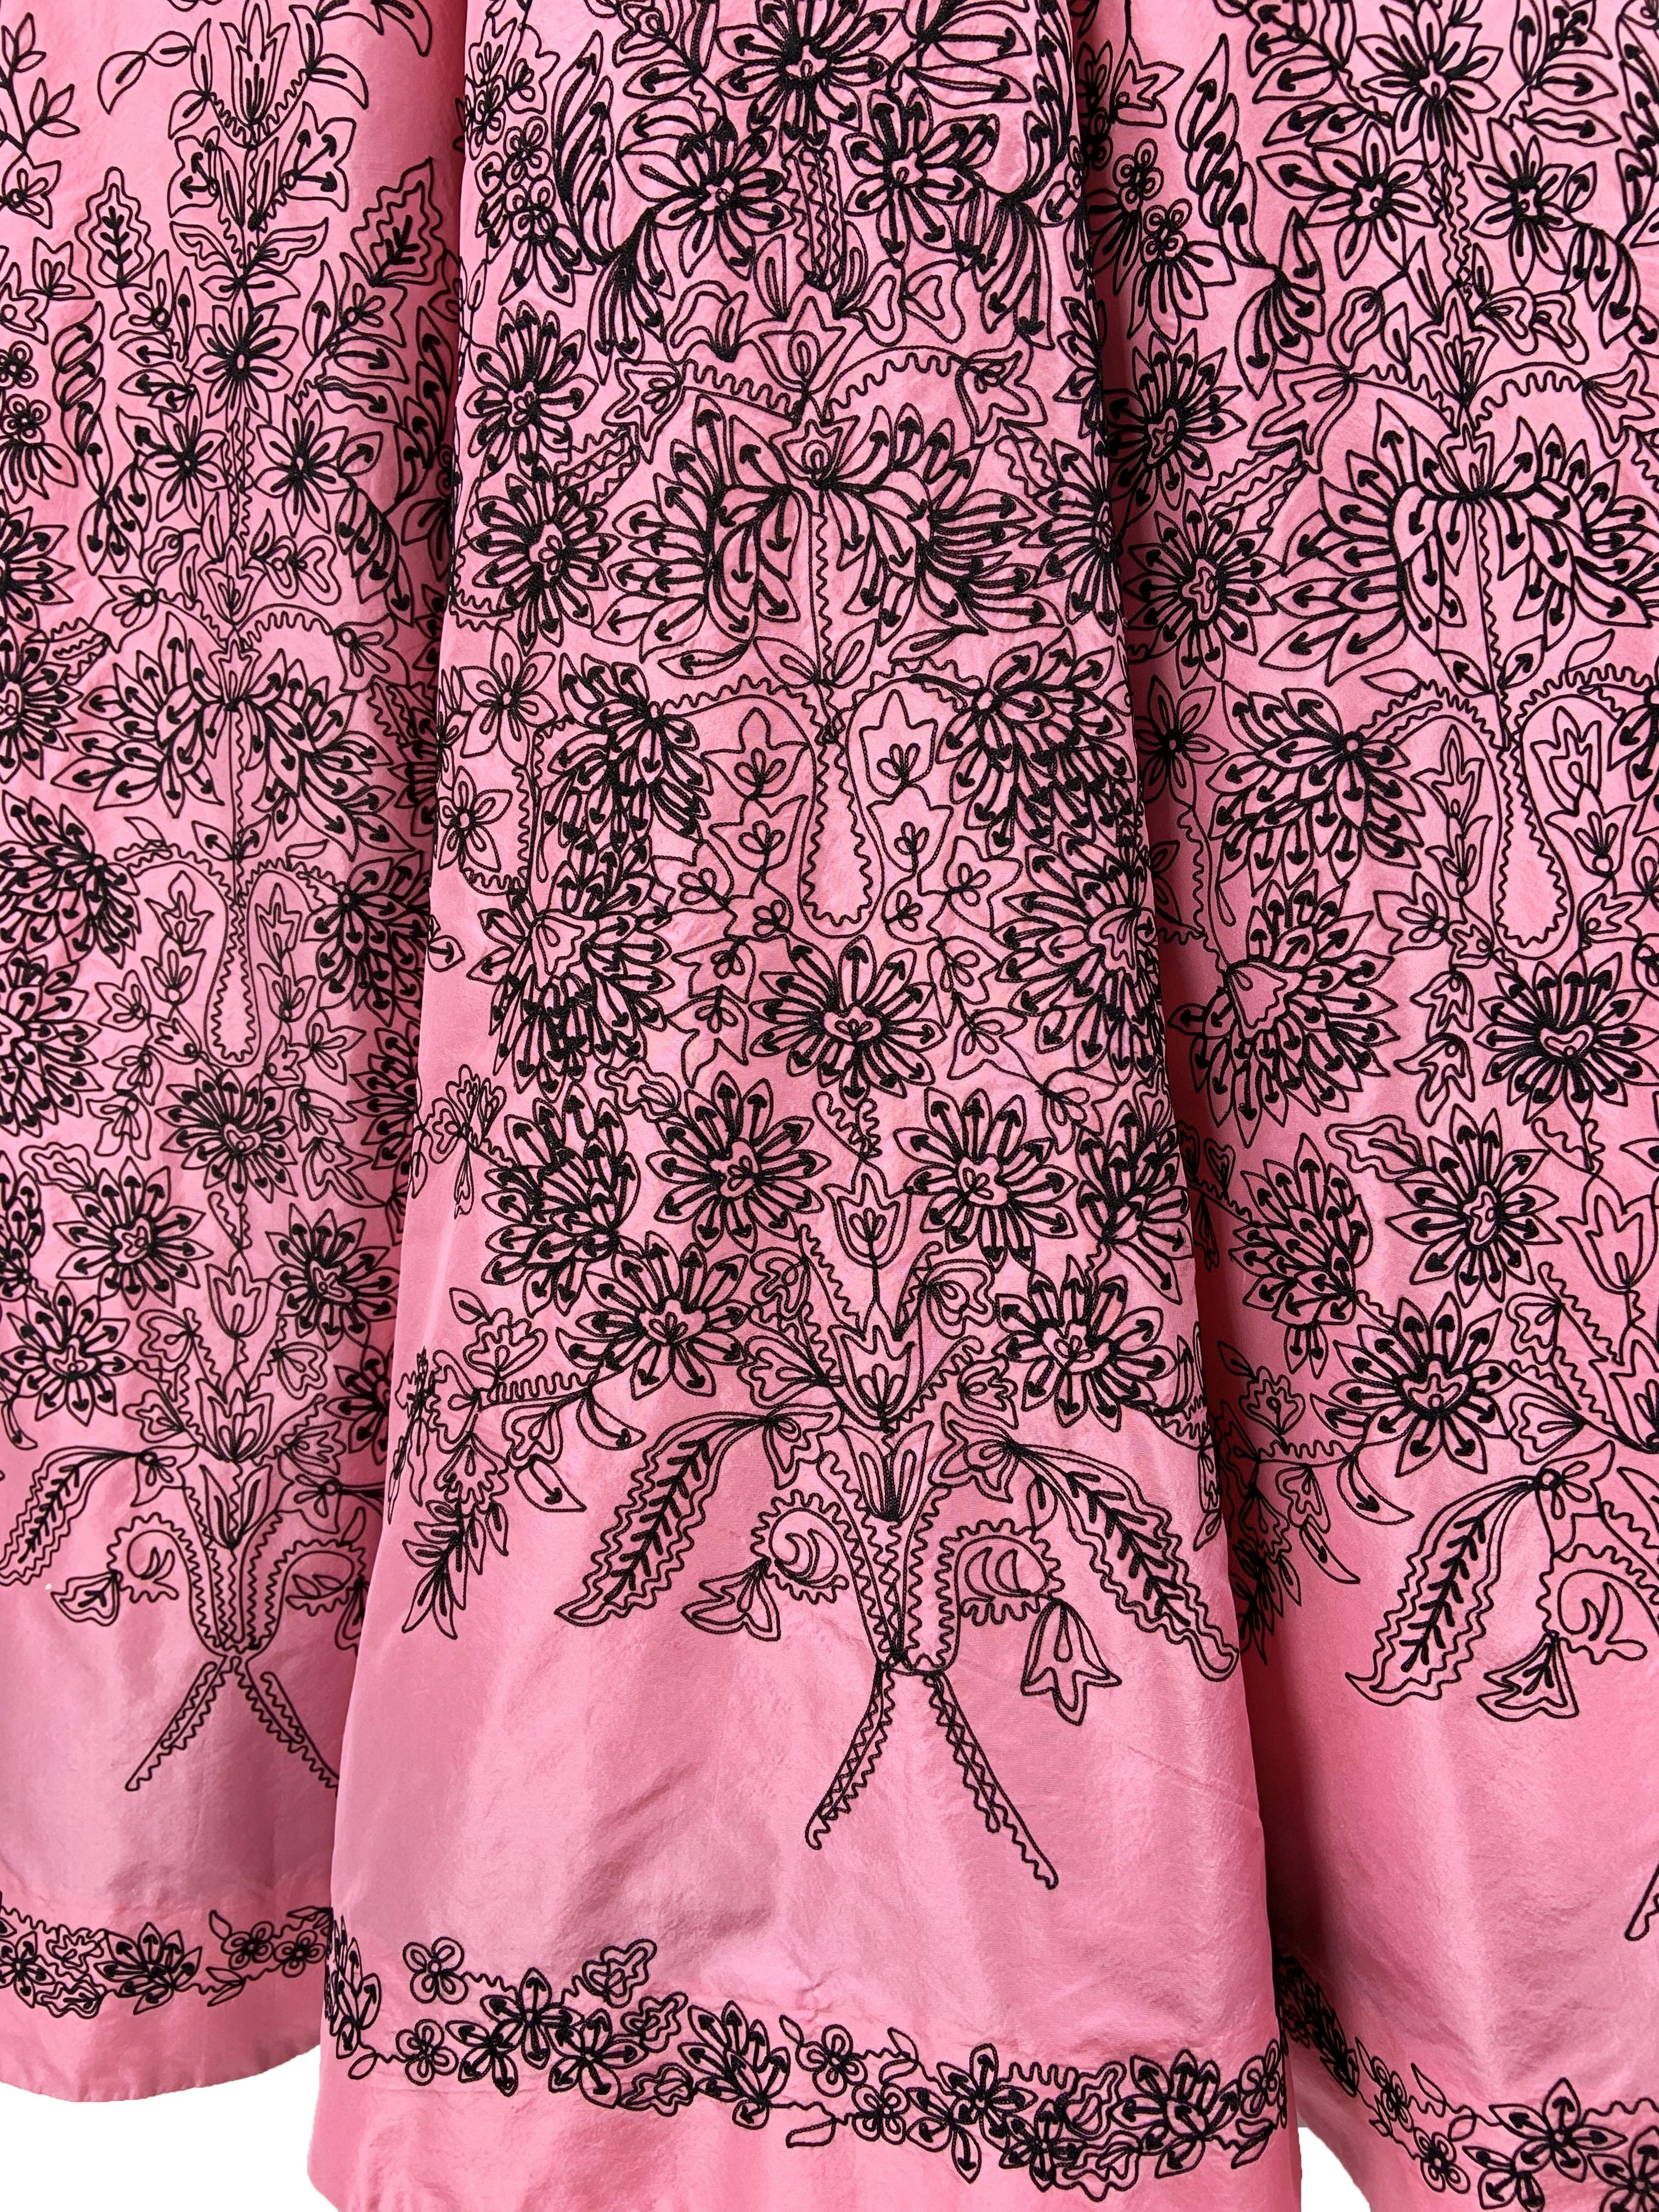 Oscar de la Renta S/S 2004 Collection Pink Silk Taffeta Embellished Dress Gown 8 For Sale 10